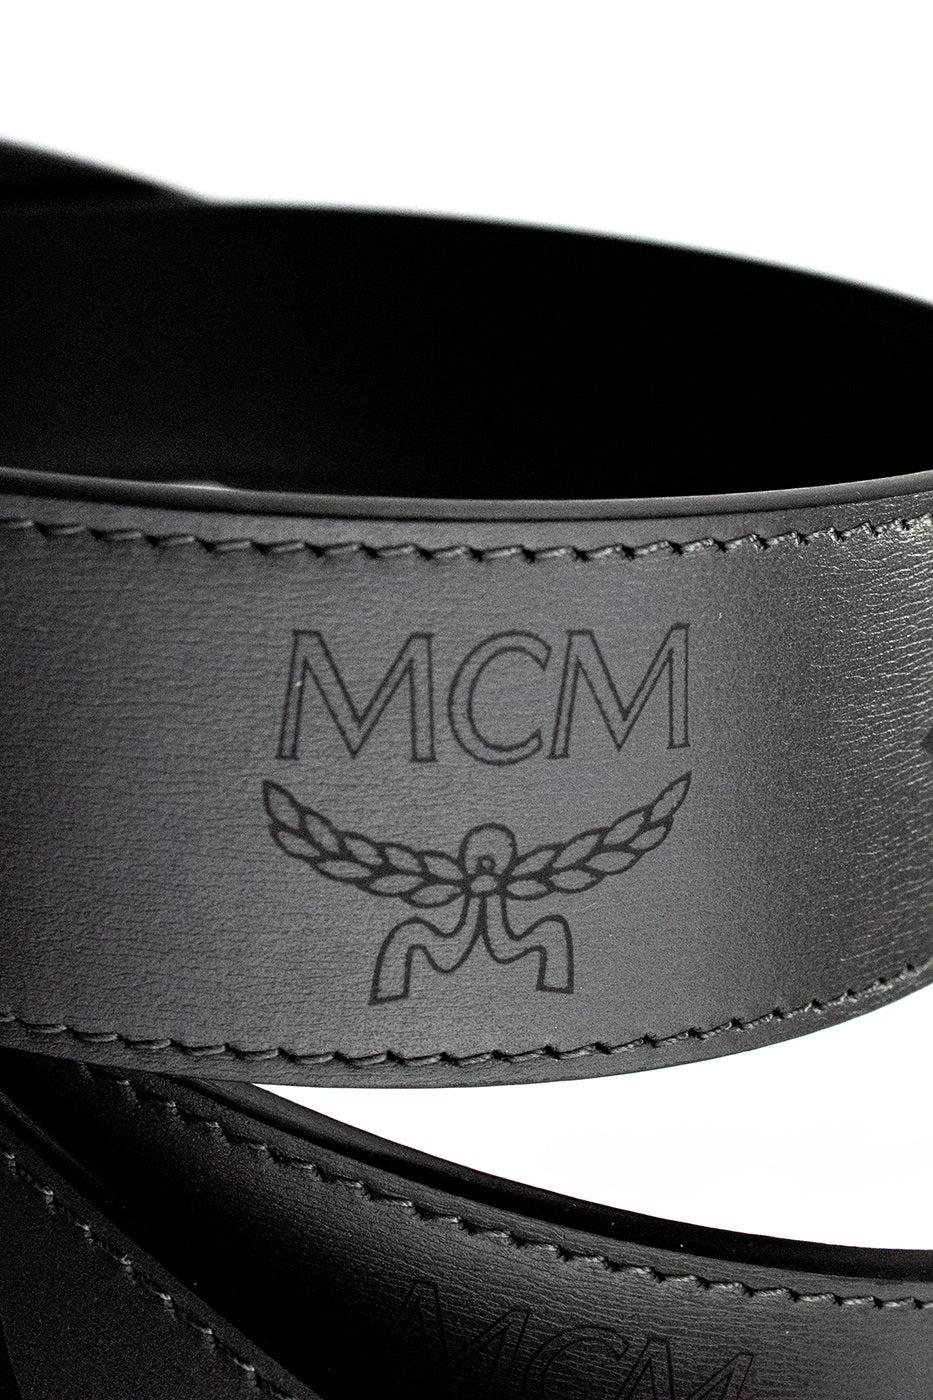 Mcm Claus M Reversible Belt Black